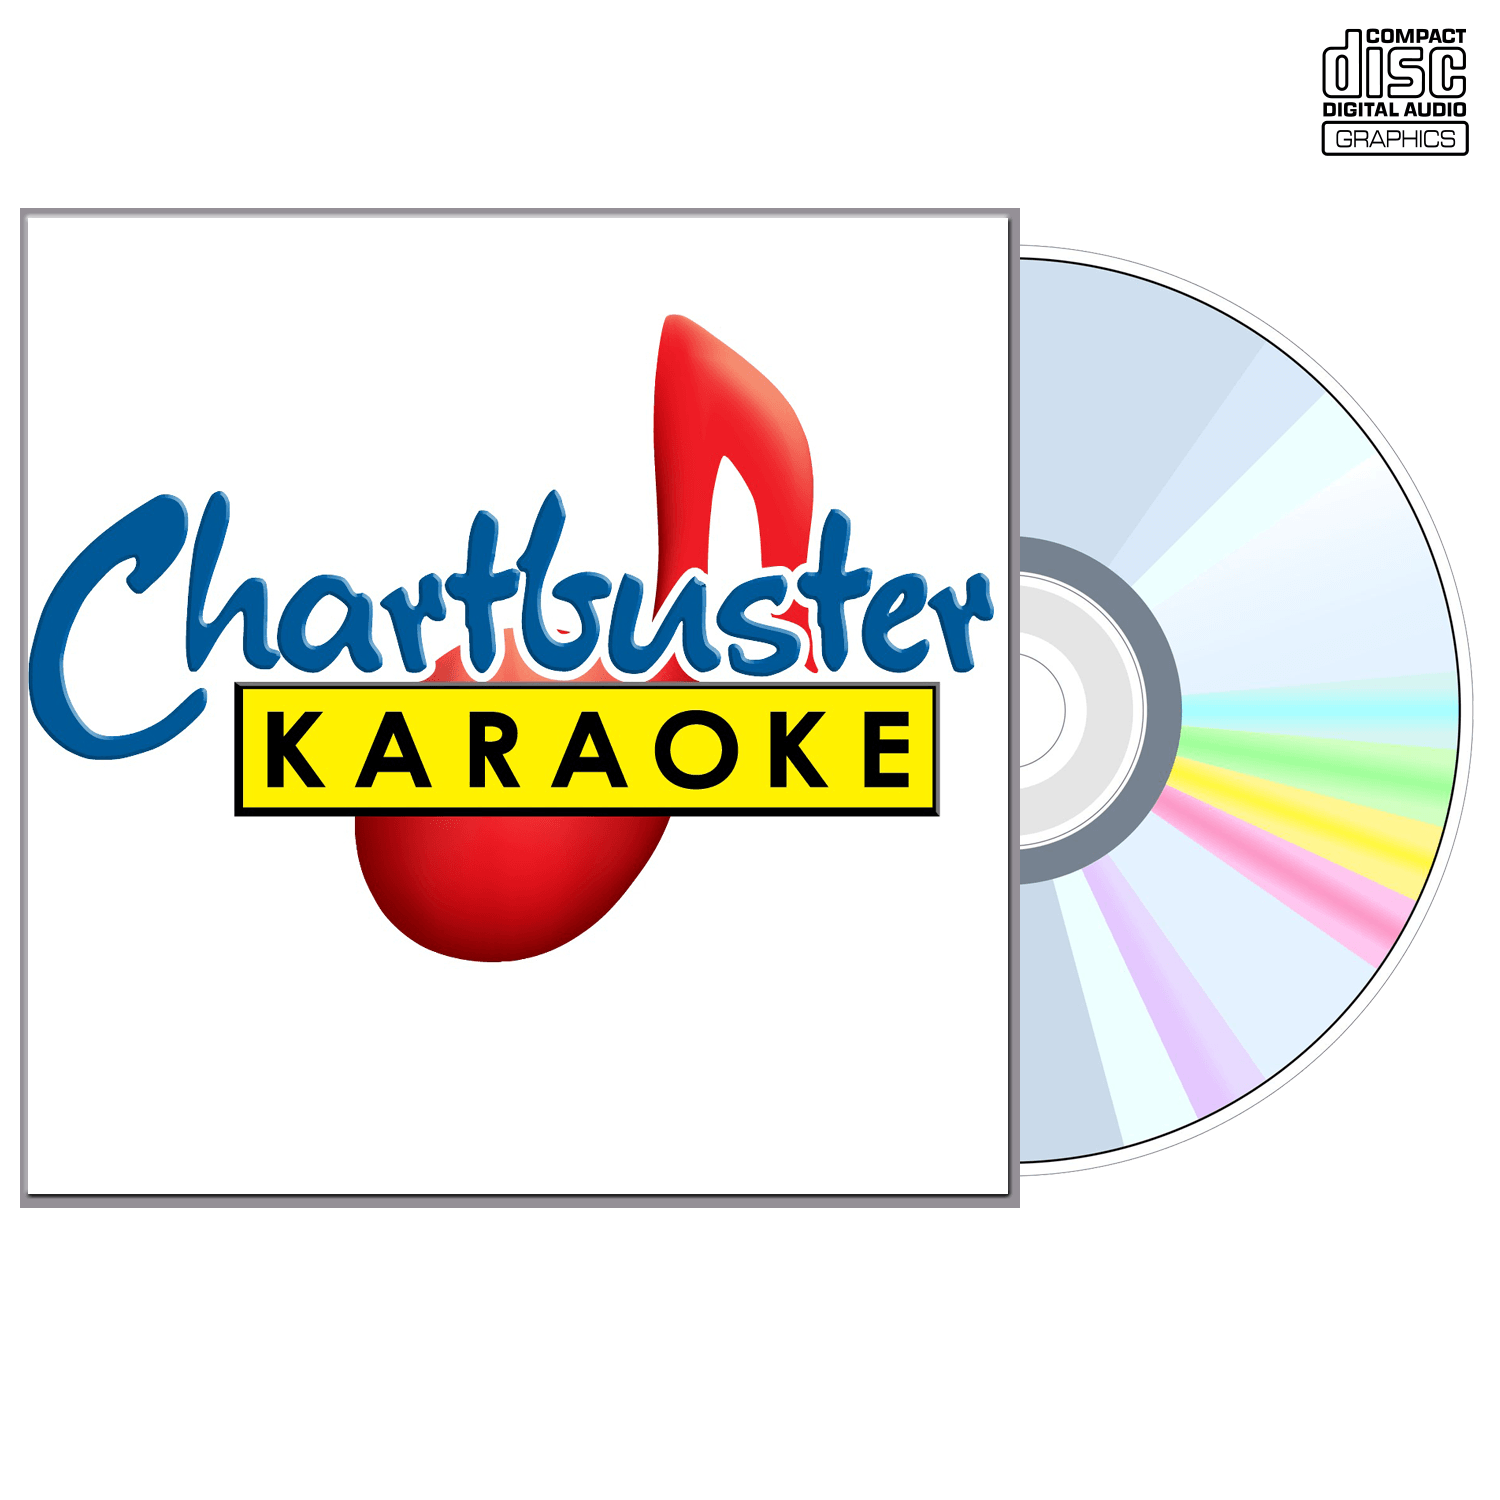 Alan Jackson Vol 2 - CD+G - Chartbuster Karaoke - Karaoke Home Entertainment